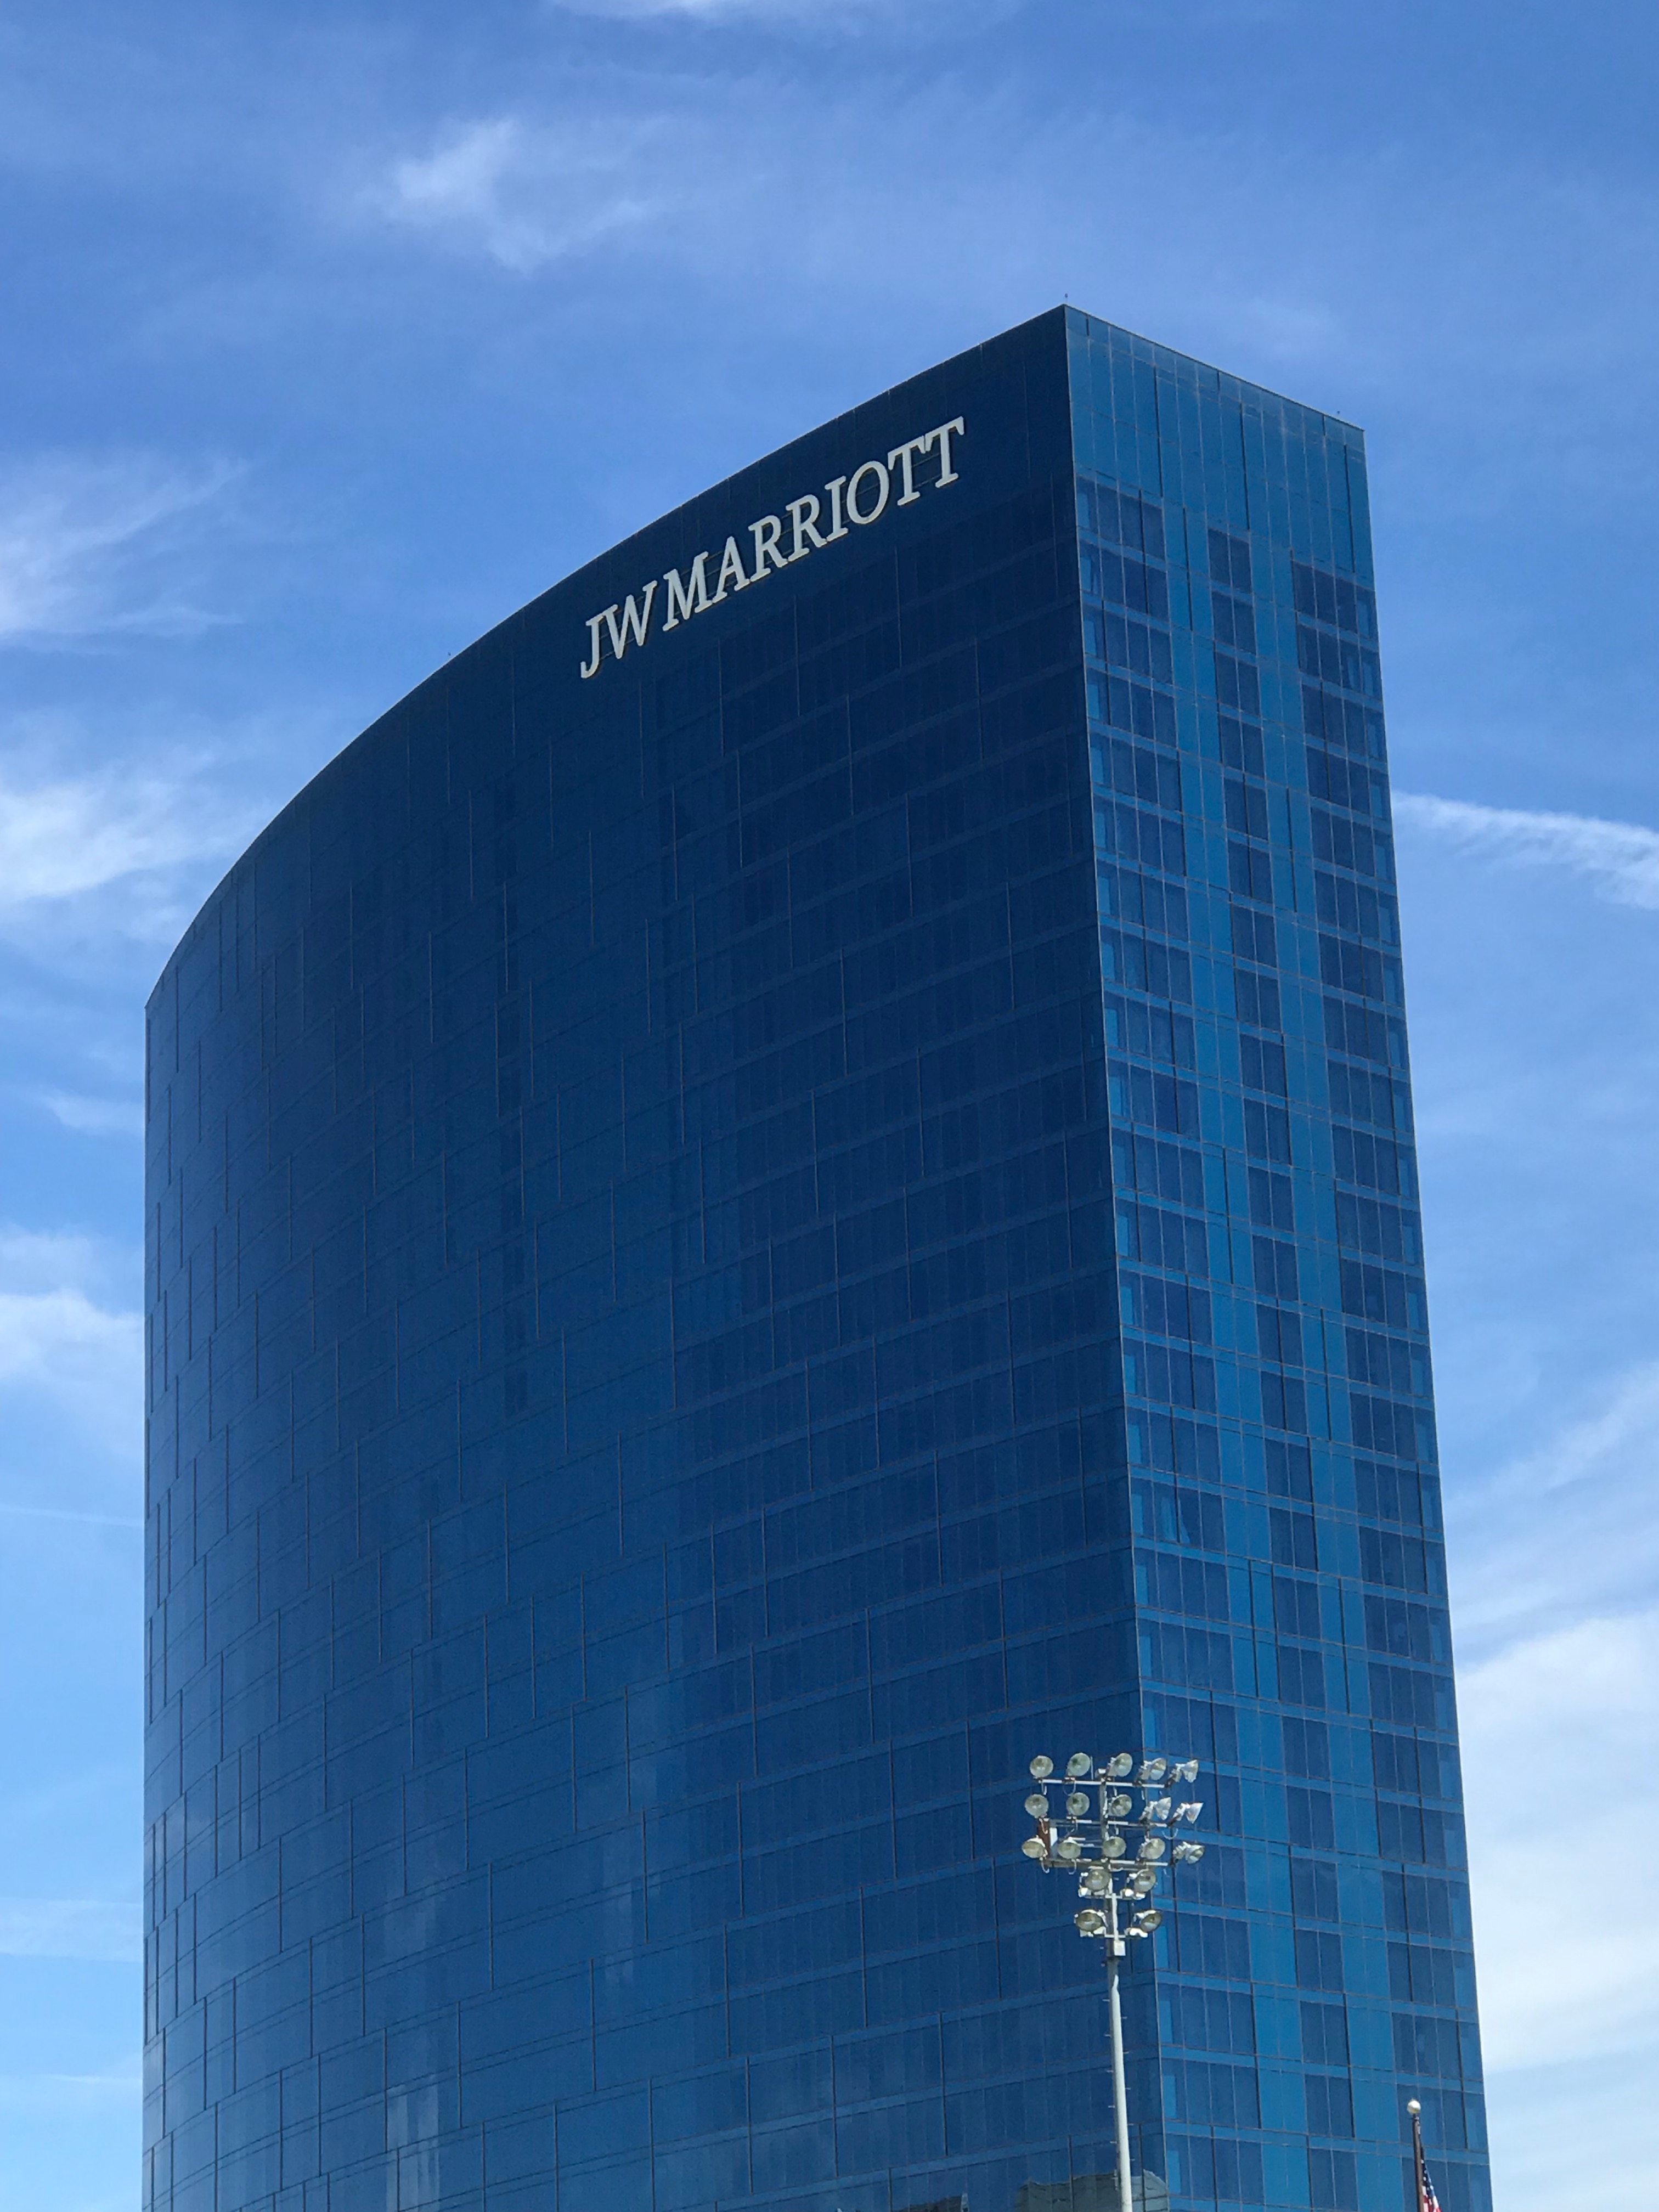 JW Marriott hotel